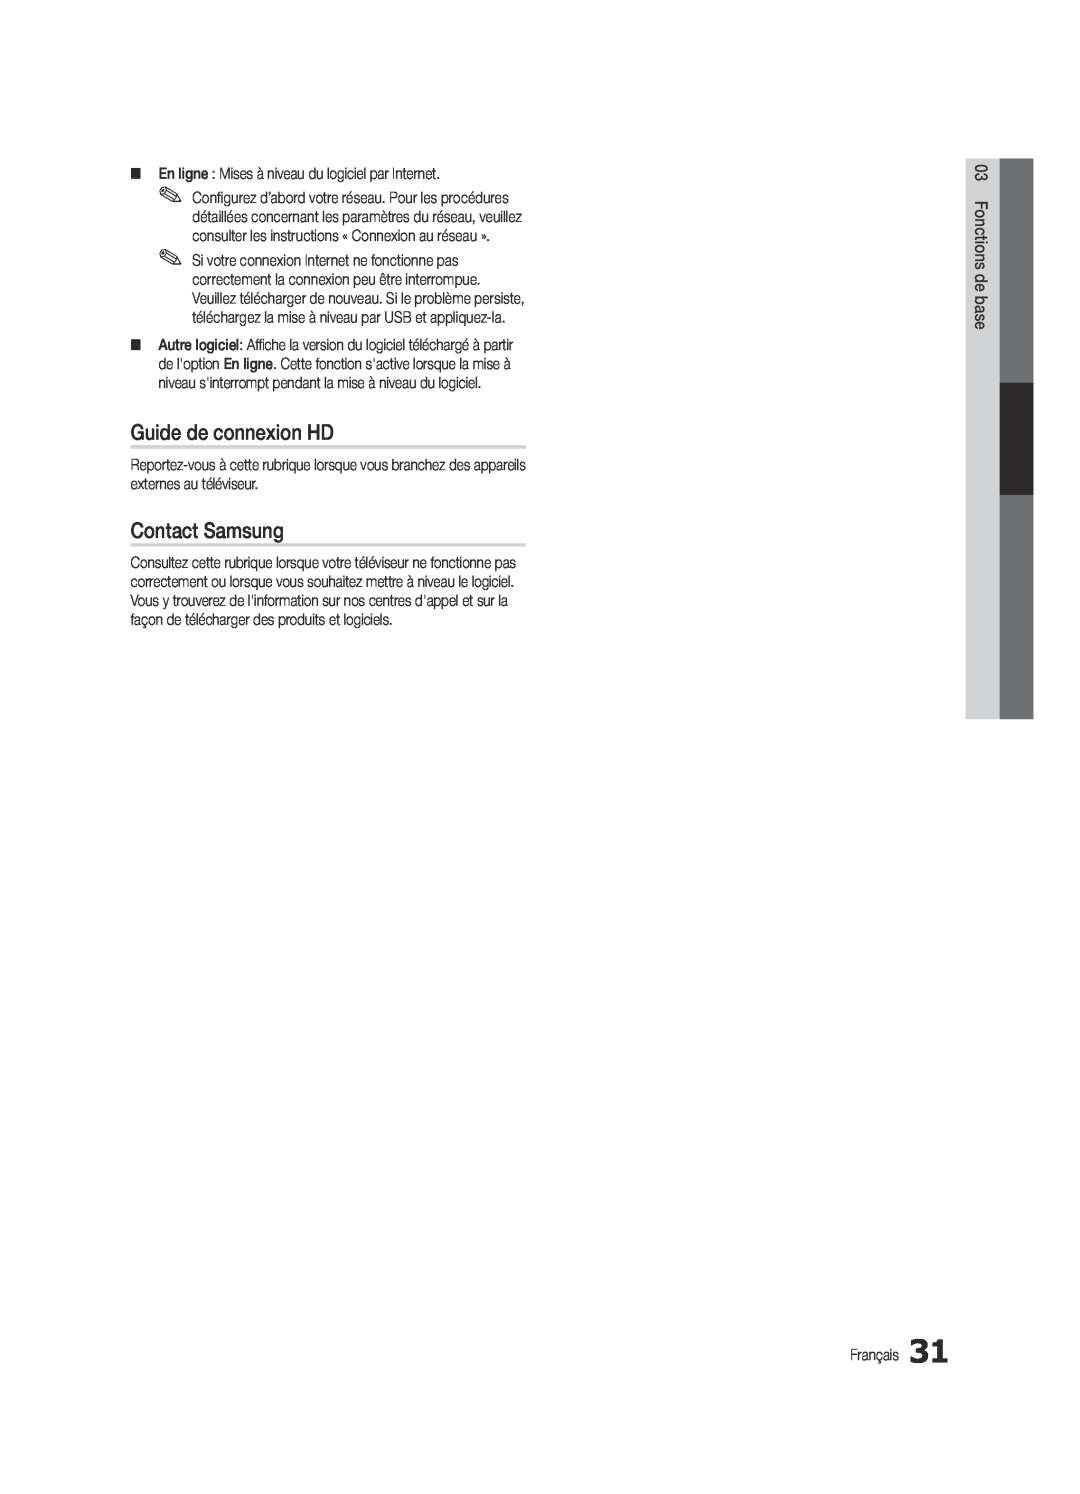 Samsung Series C9, BN68-03088A-01 user manual Guide de connexion HD, Contact Samsung, basede 03 Fonctions 